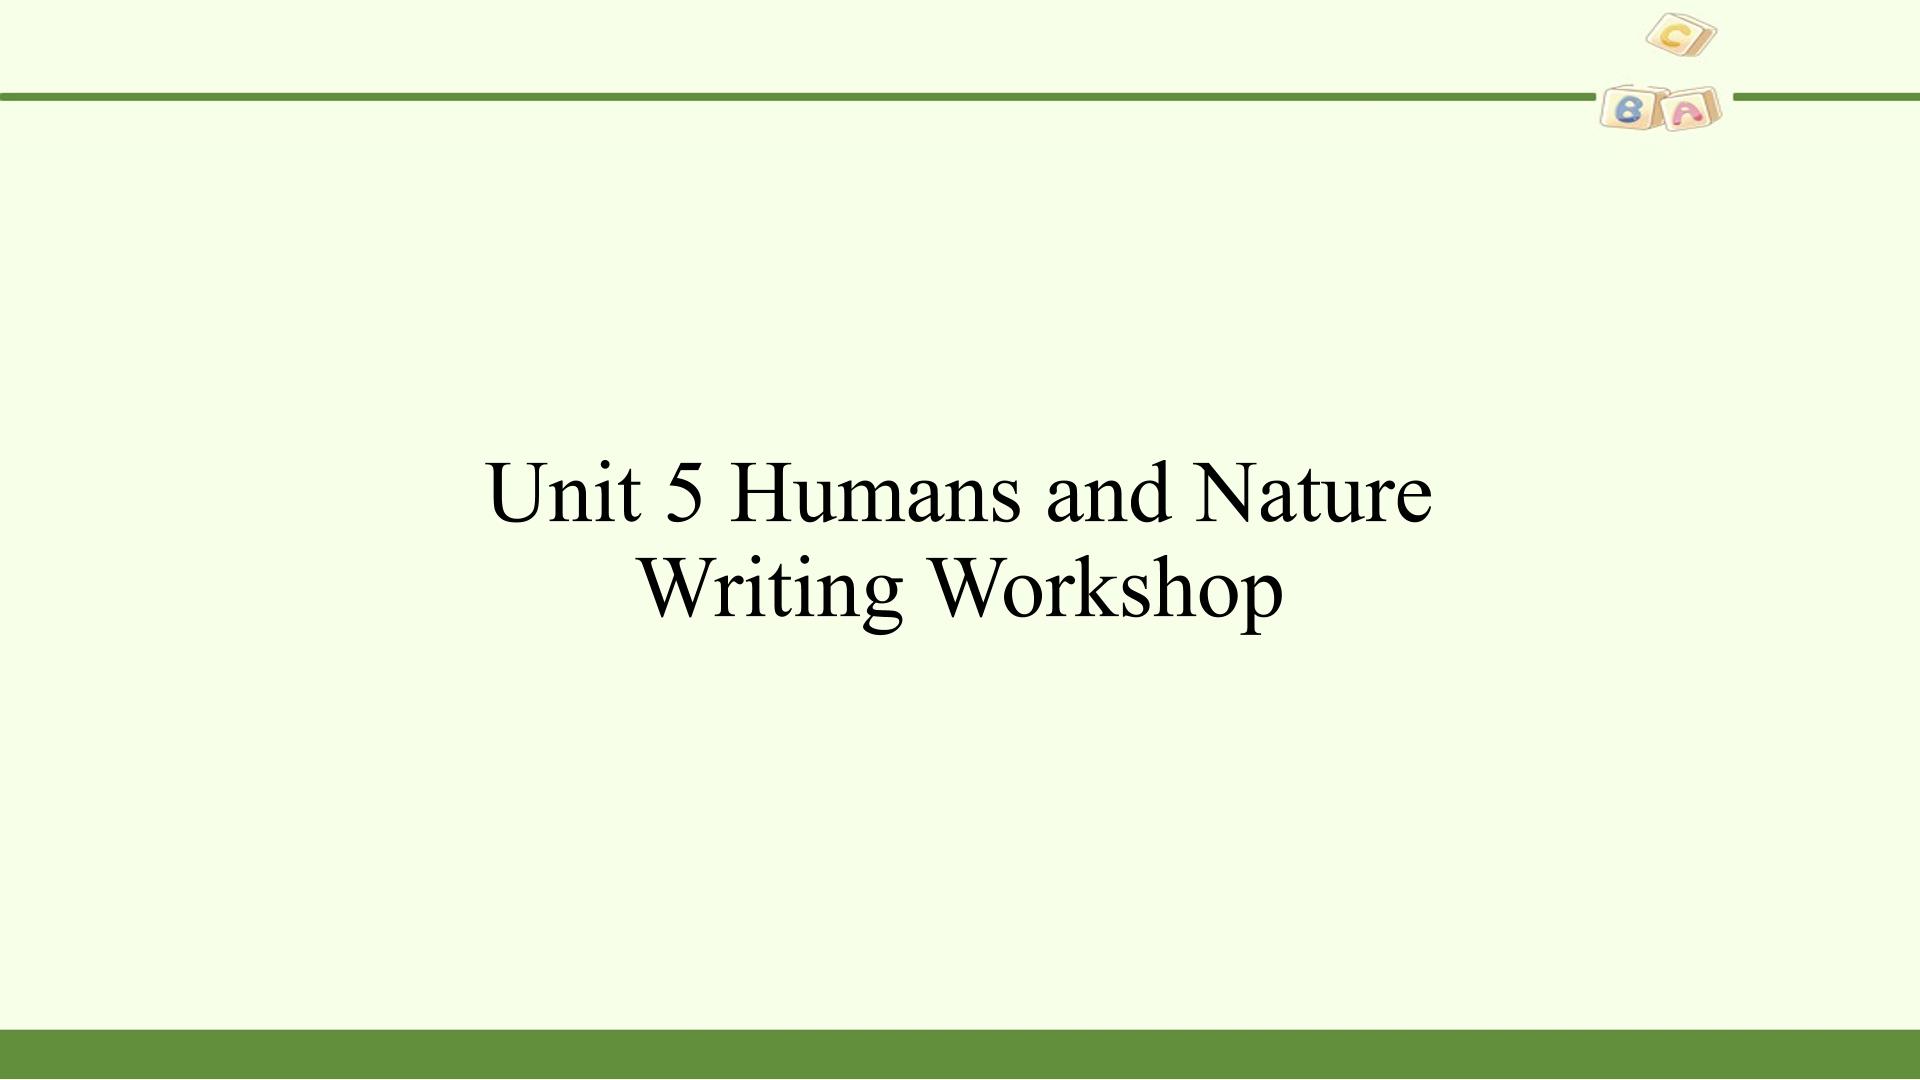 Writing Workshop—A Brochure